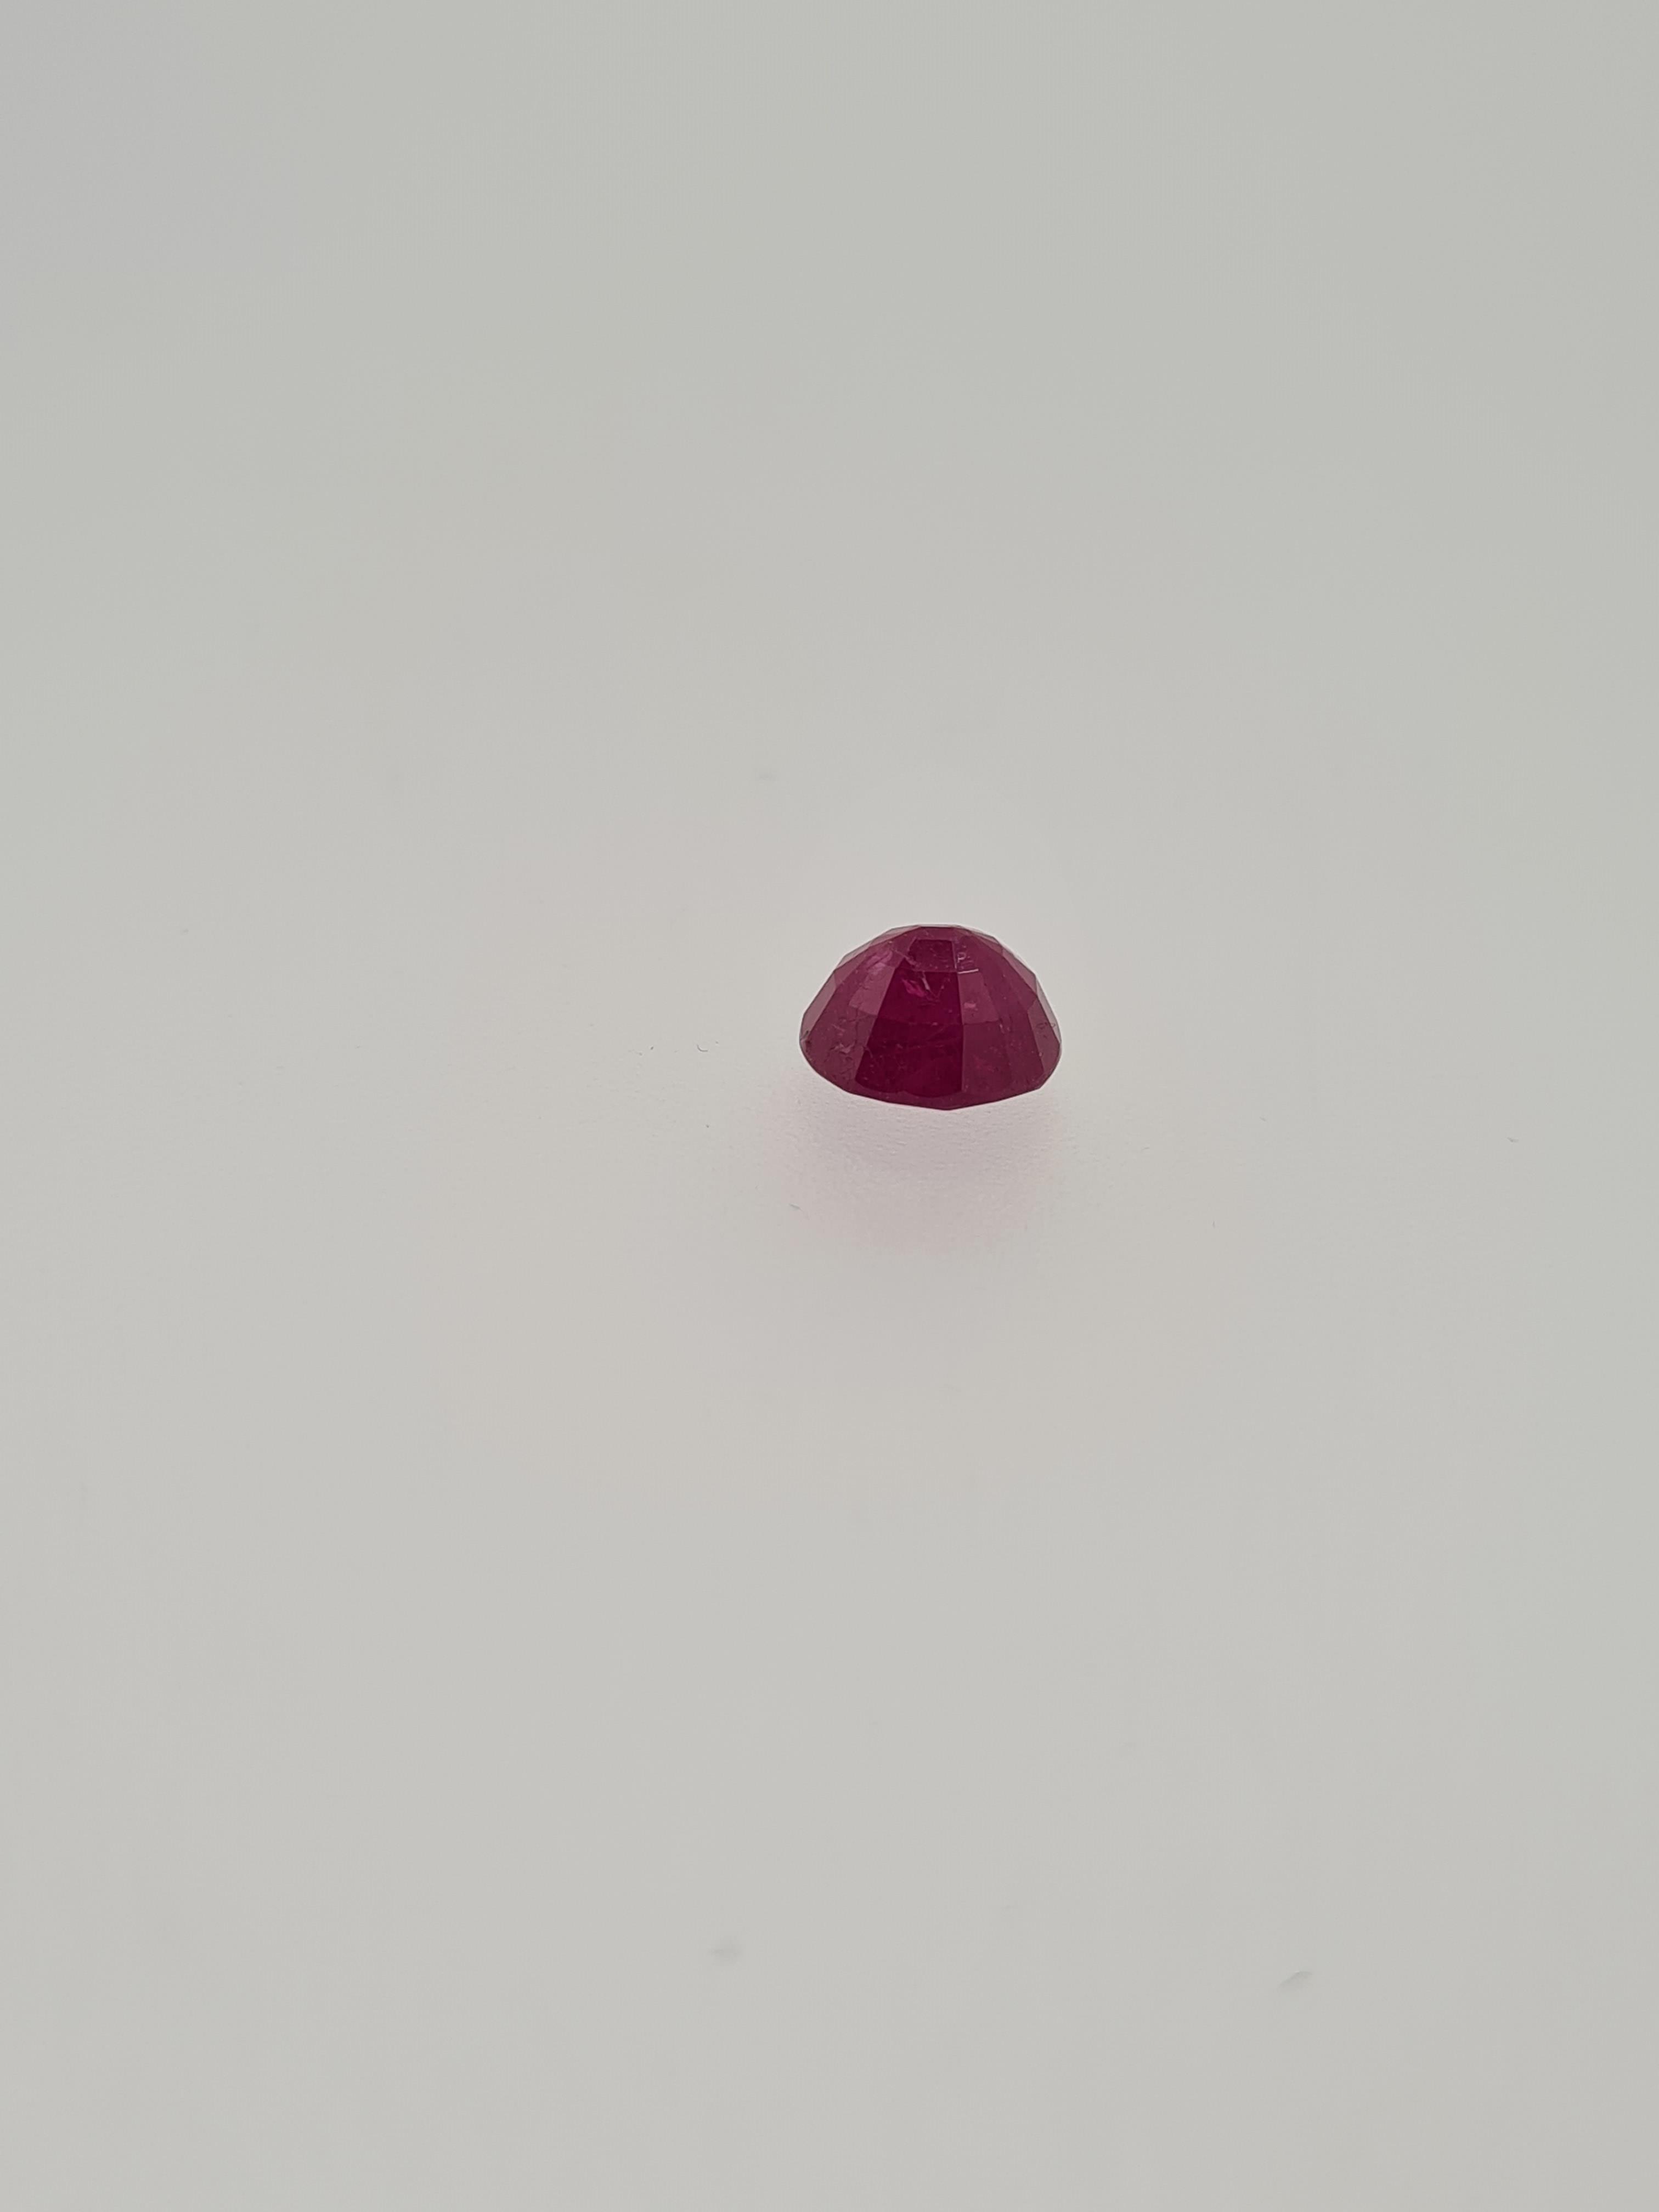 Ruby oval cut gem stone - Image 2 of 6